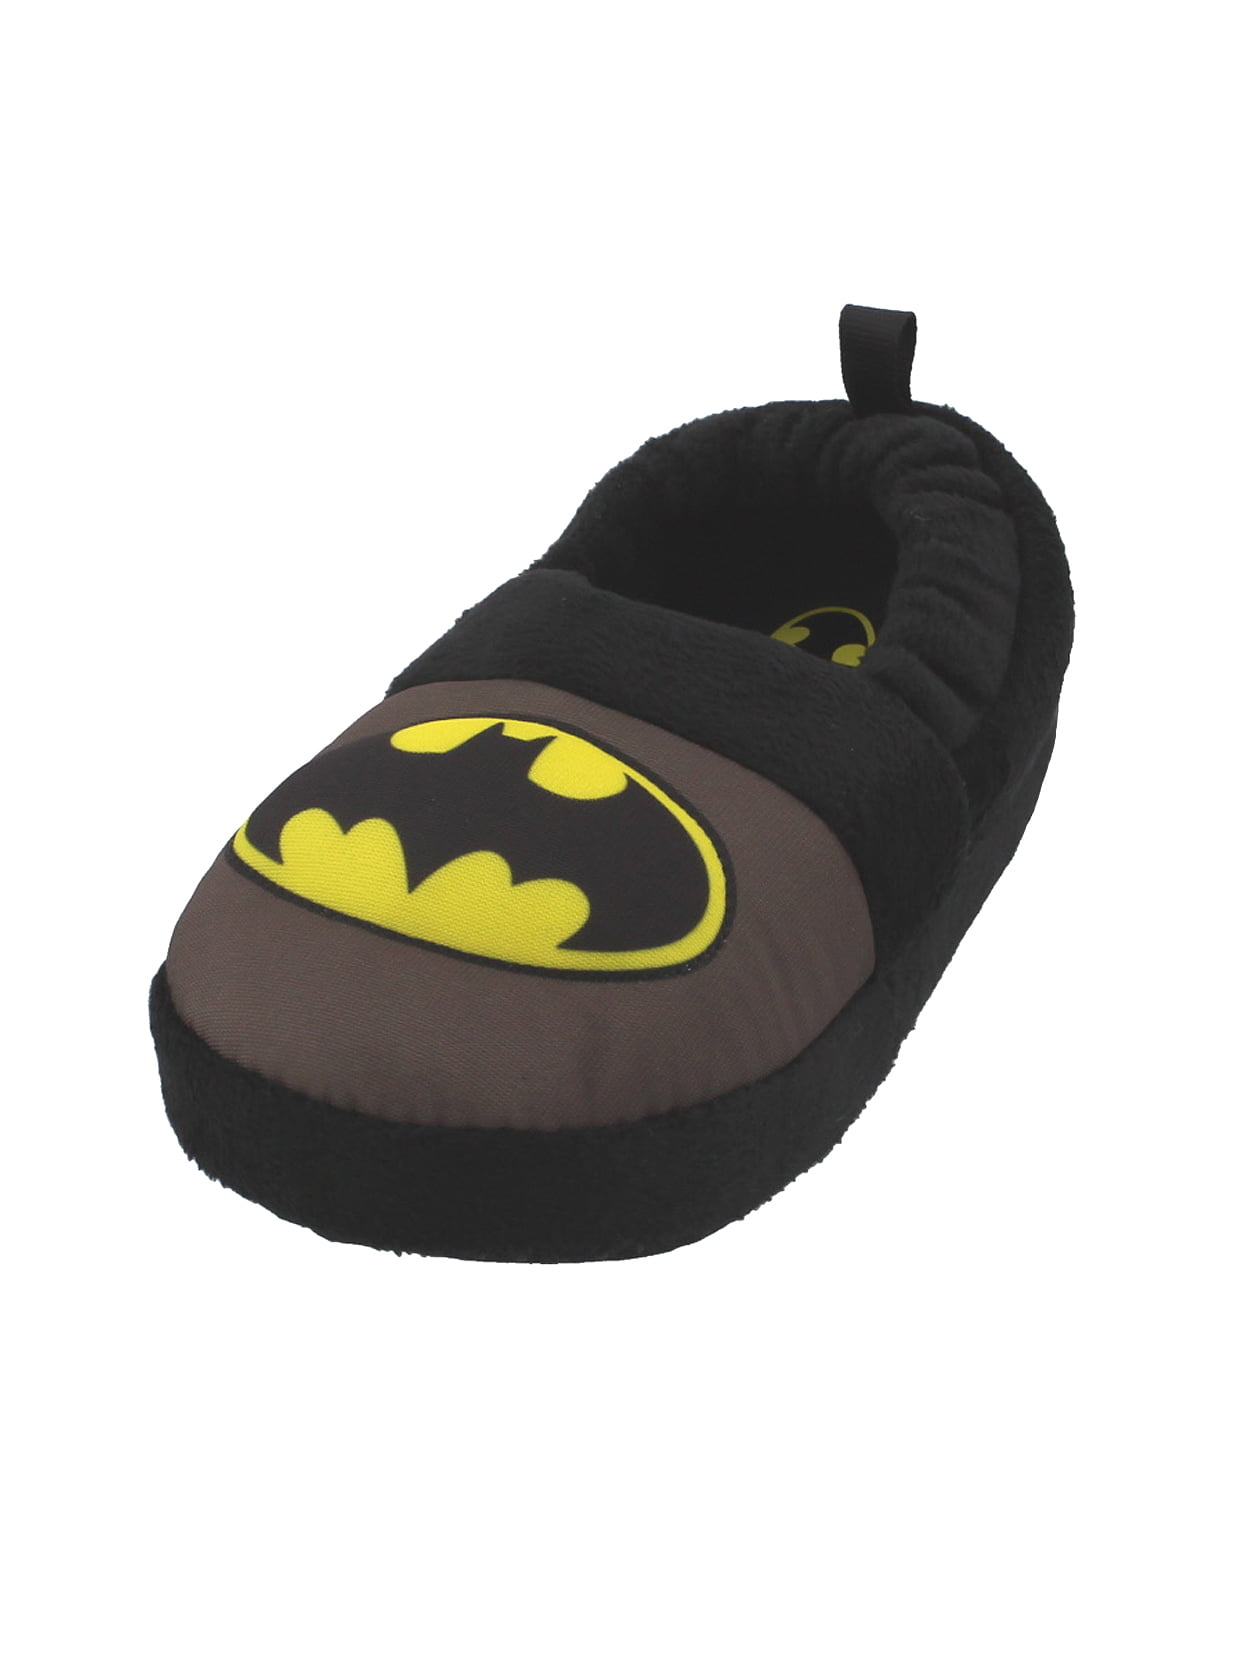 DC Comics Boys Batman Slippers Easy Fasten Slipper Boots Kids House Shoes Booties